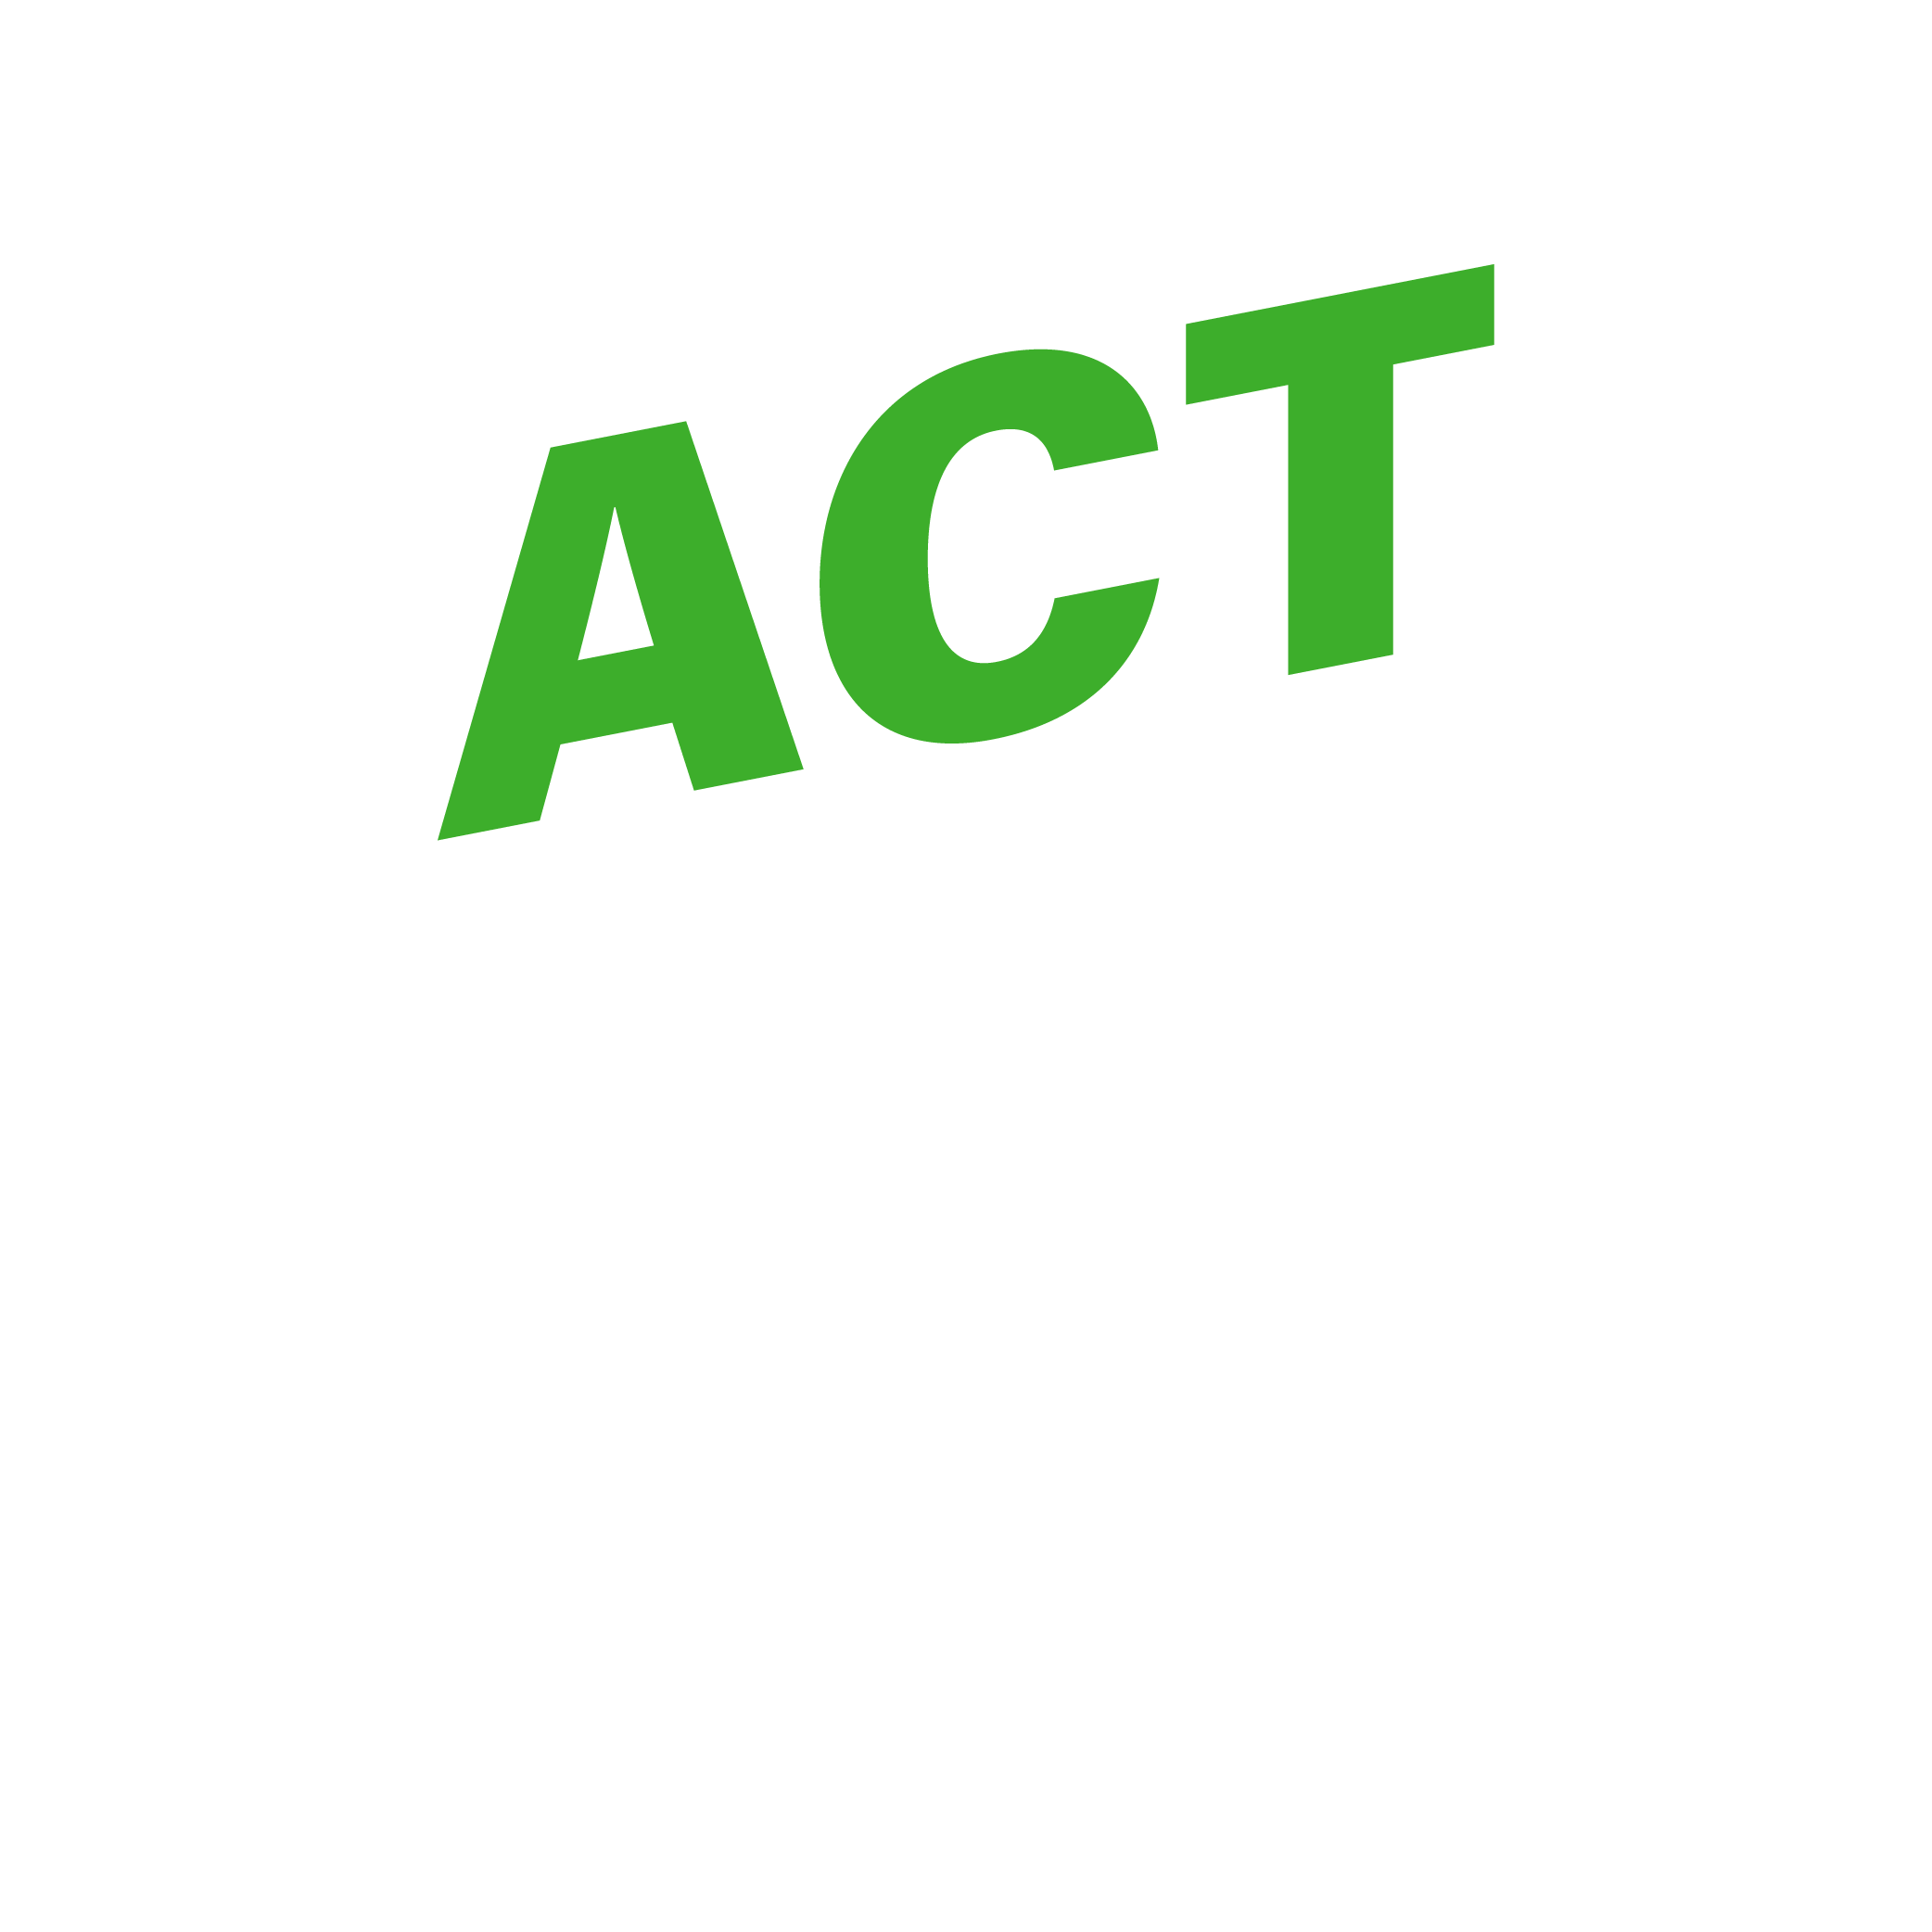 Act on NCDS - Accountability logo purple negative